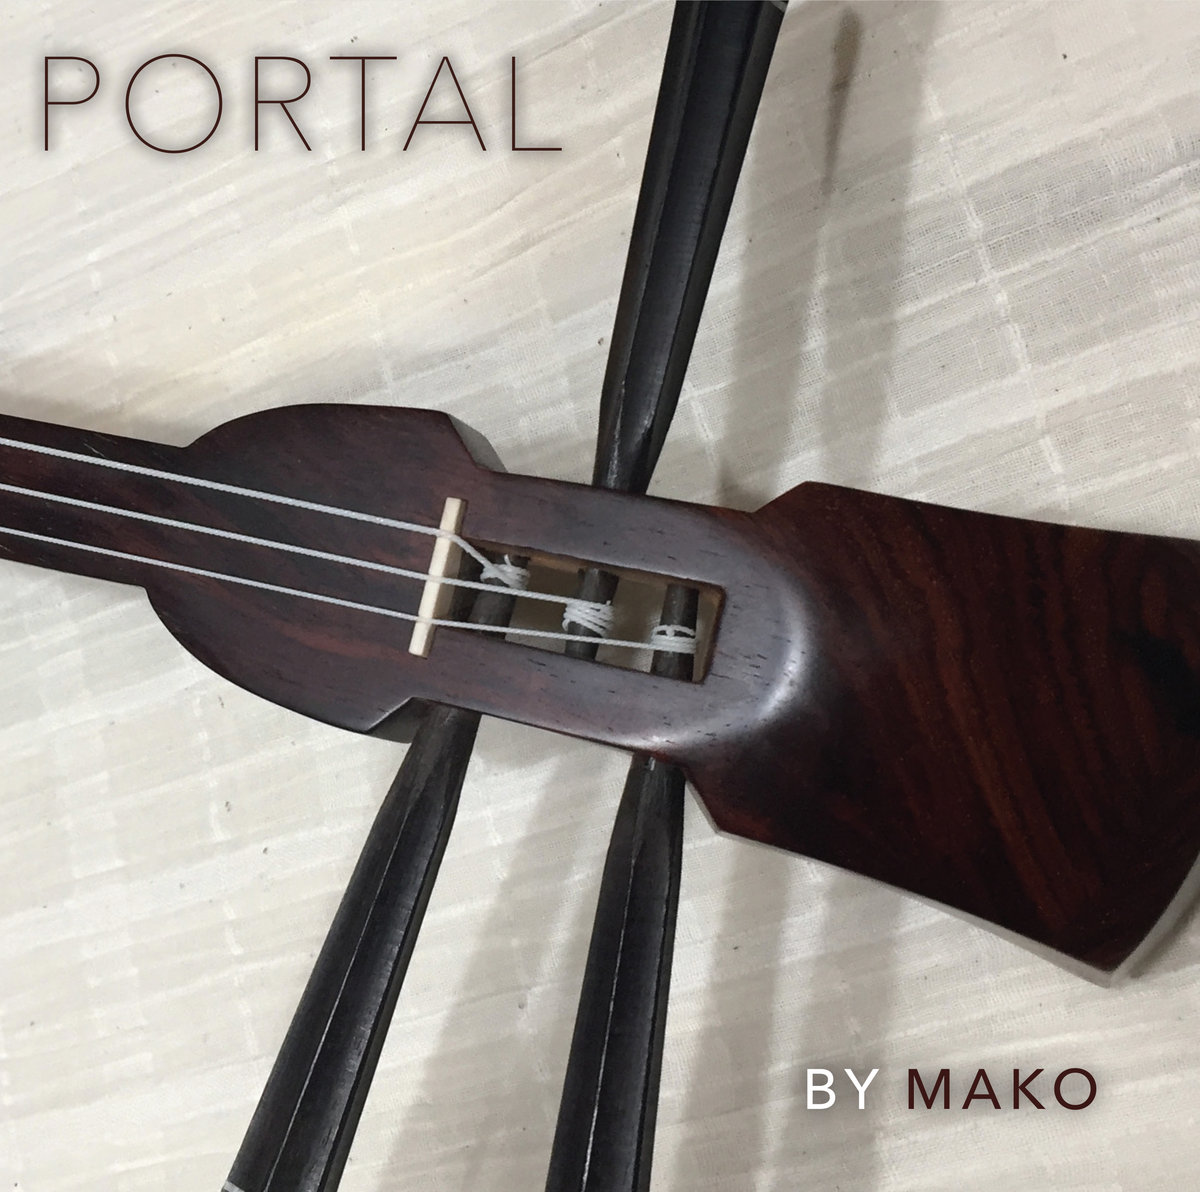 Mako - Portal